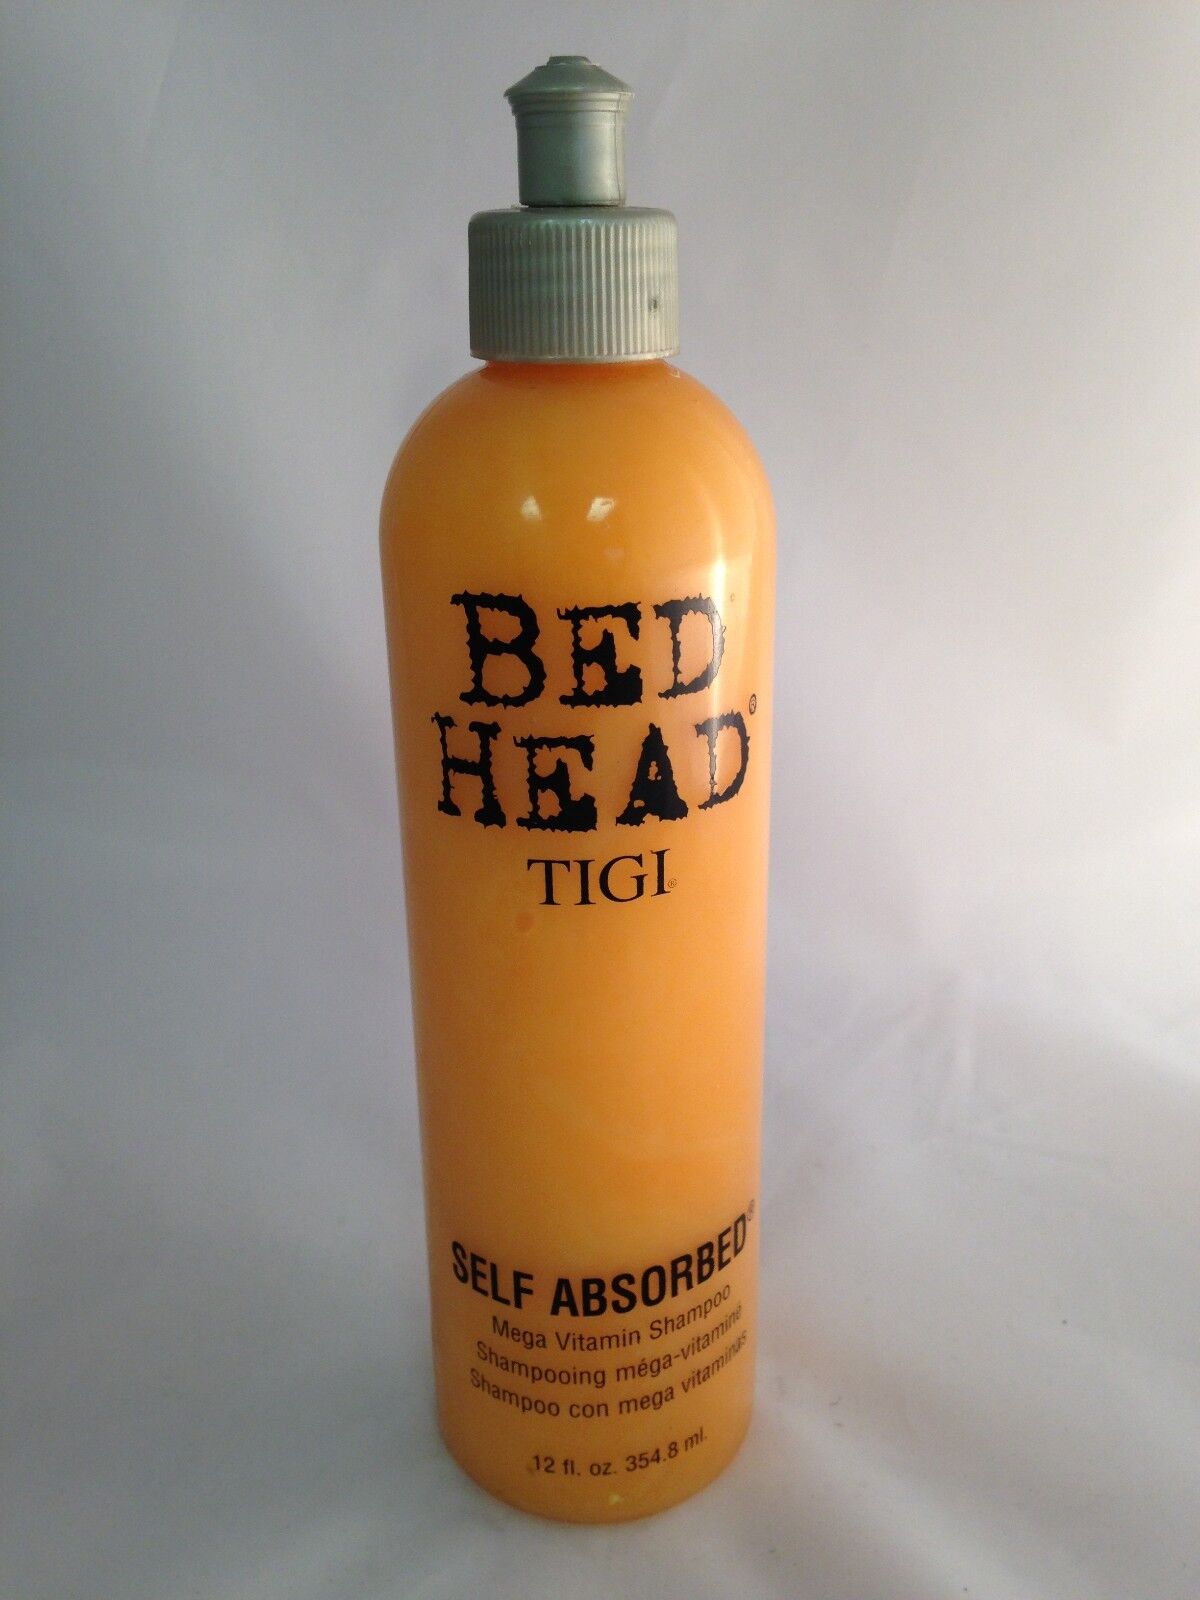 BED HEAD TIGI Self Absorbed Mega Vitamin Shampoo 12oz